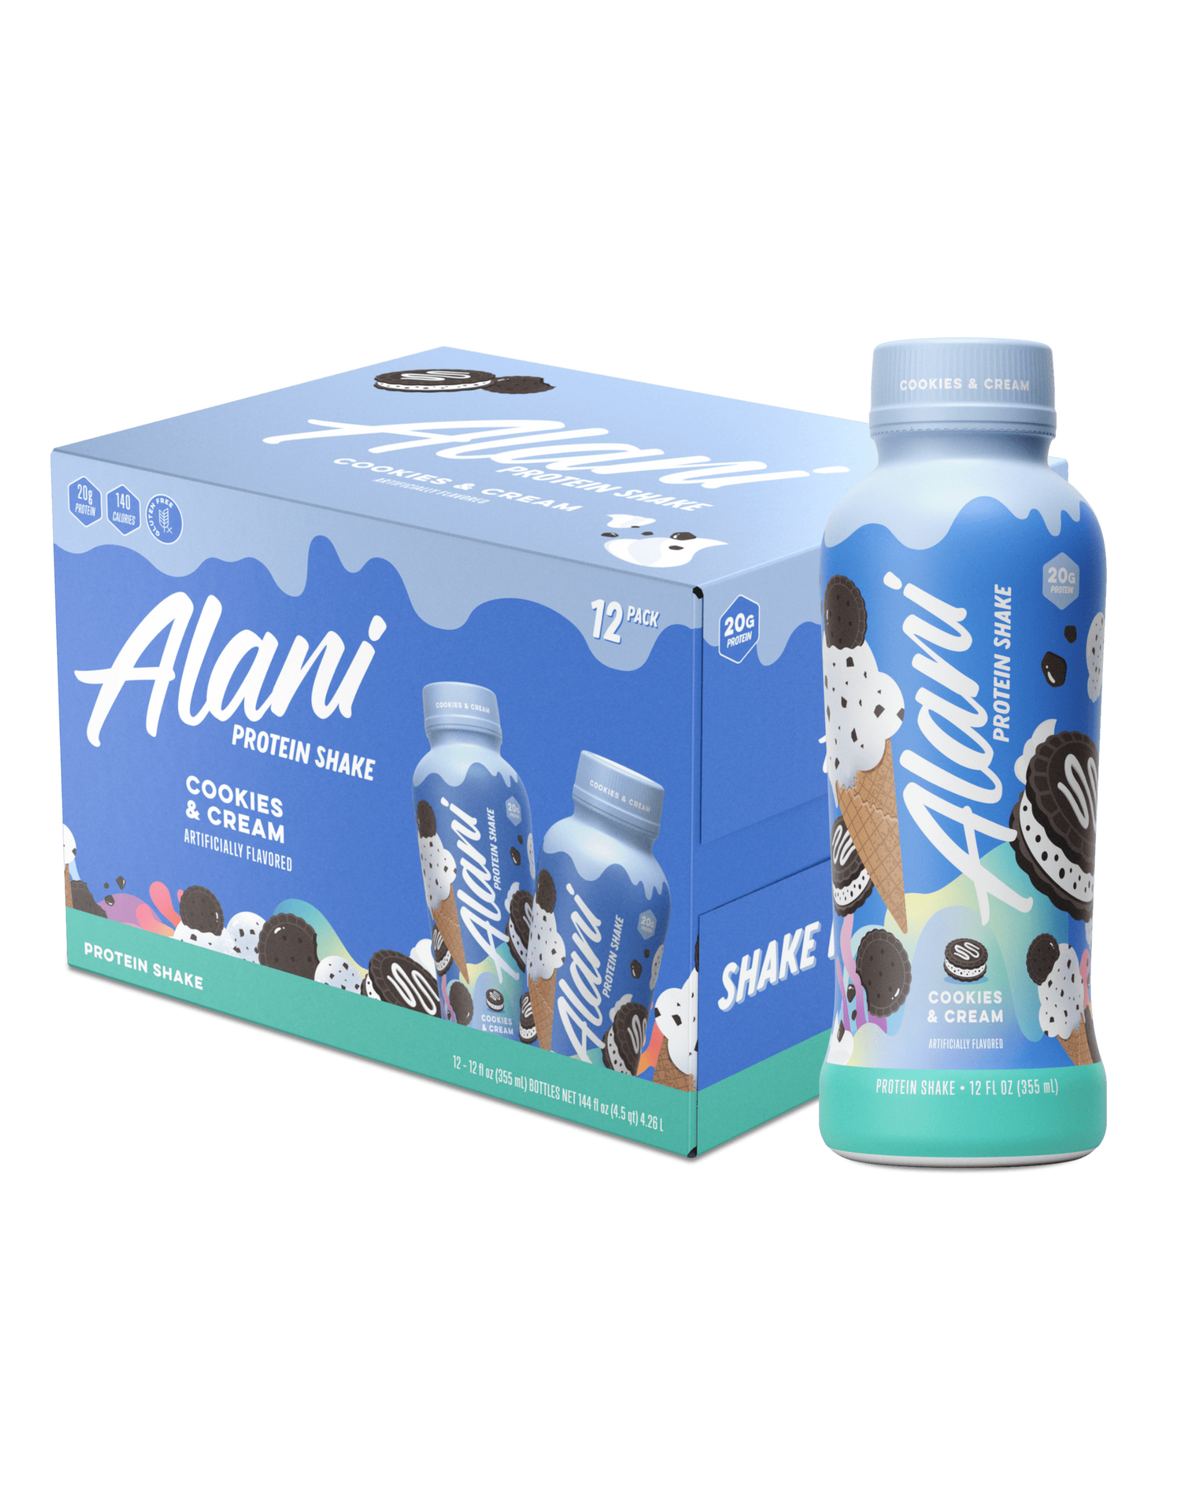 12pk box of bottles of Alani Nu Protein Shake - Cookies &amp; Cream.